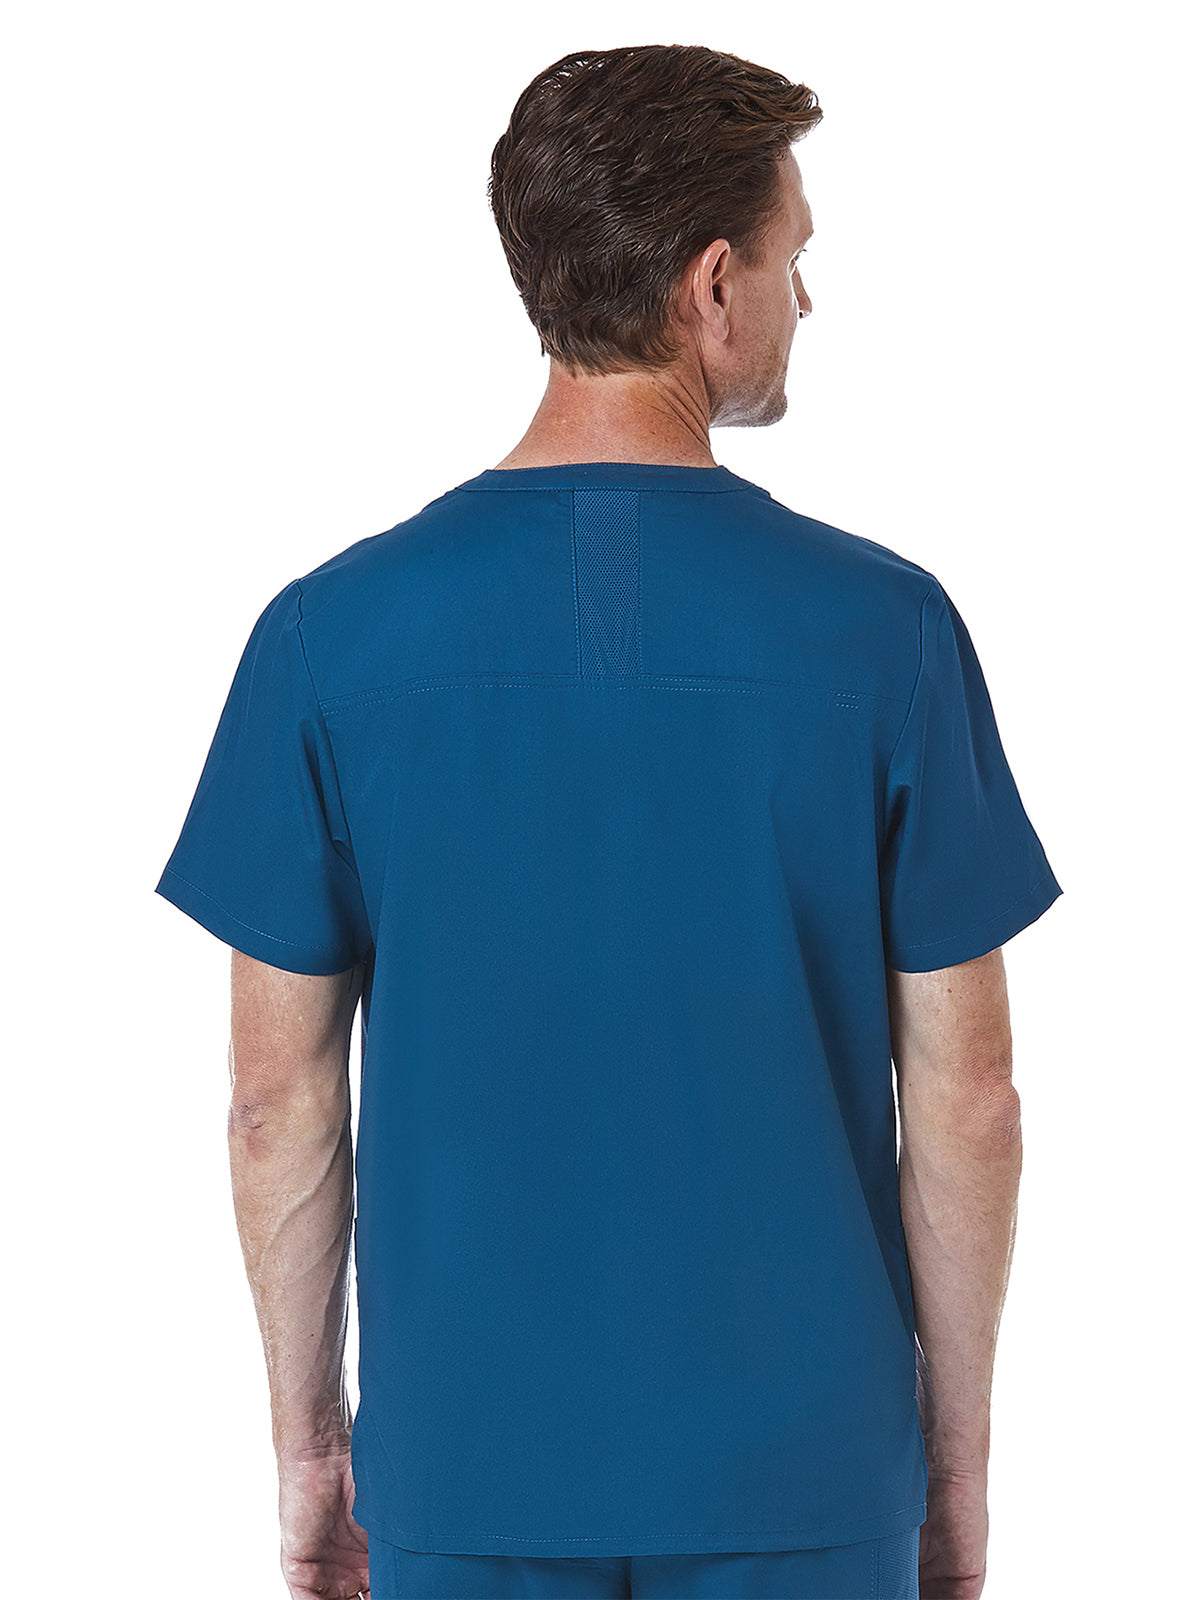 Men's Wrinkle-Resistant Top - 5308 - Caribbean Blue